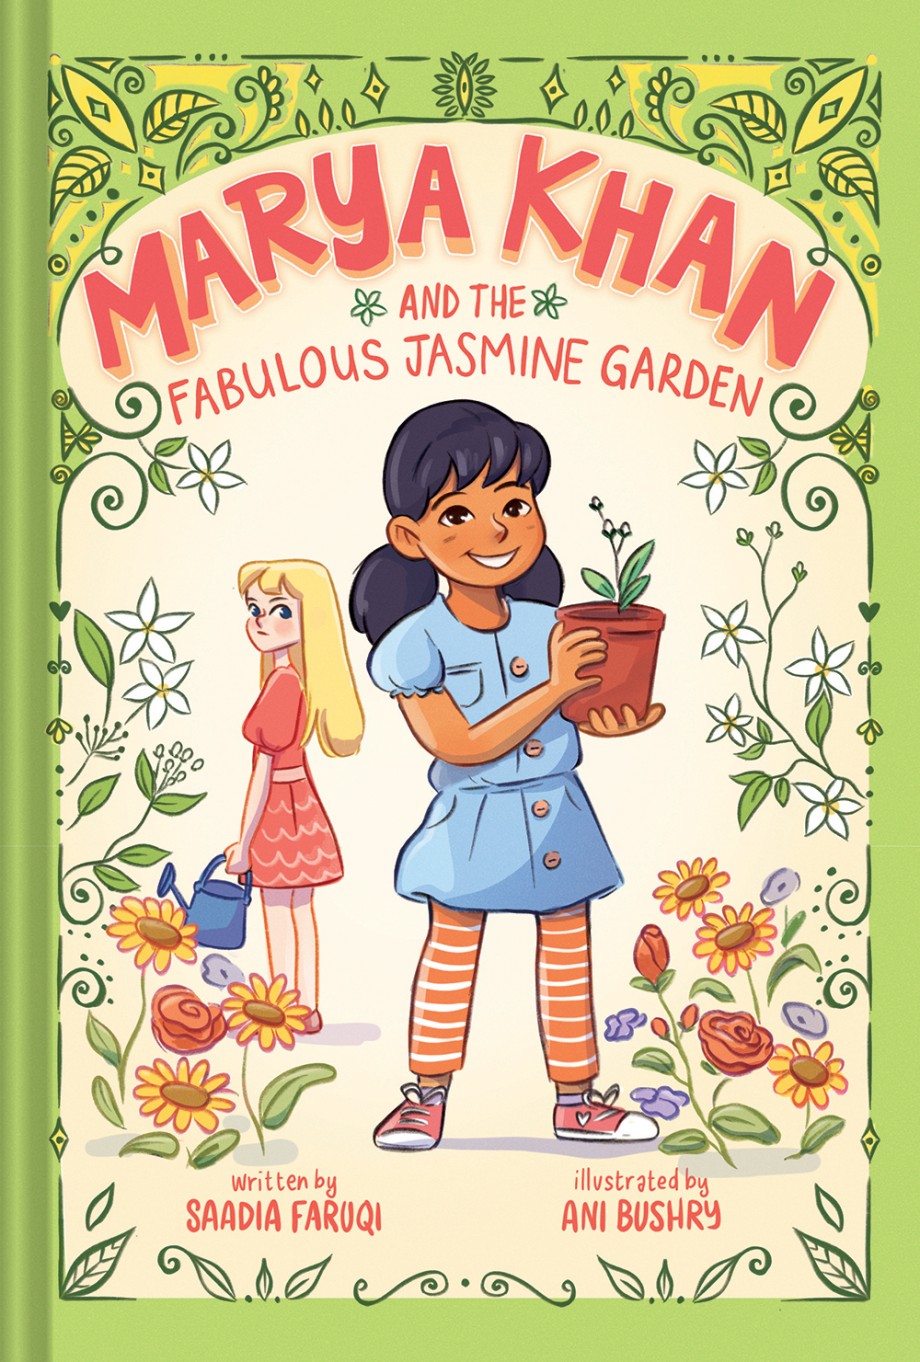 Marya Khan and the Fabulous Jasmine Garden (Marya Khan #2) 